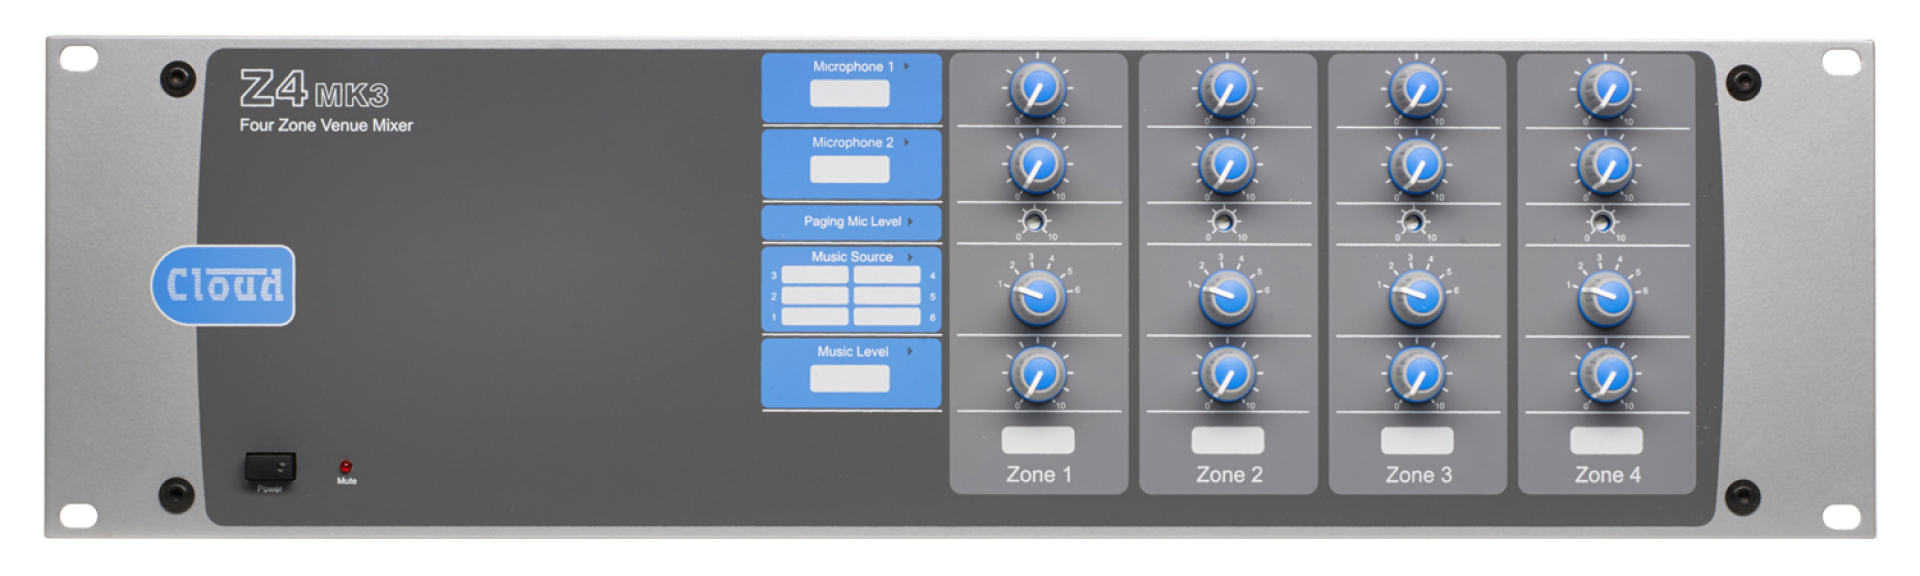 Cloud Amplifiers, Mixer Amps & Zone Mixers - Z4 MK3